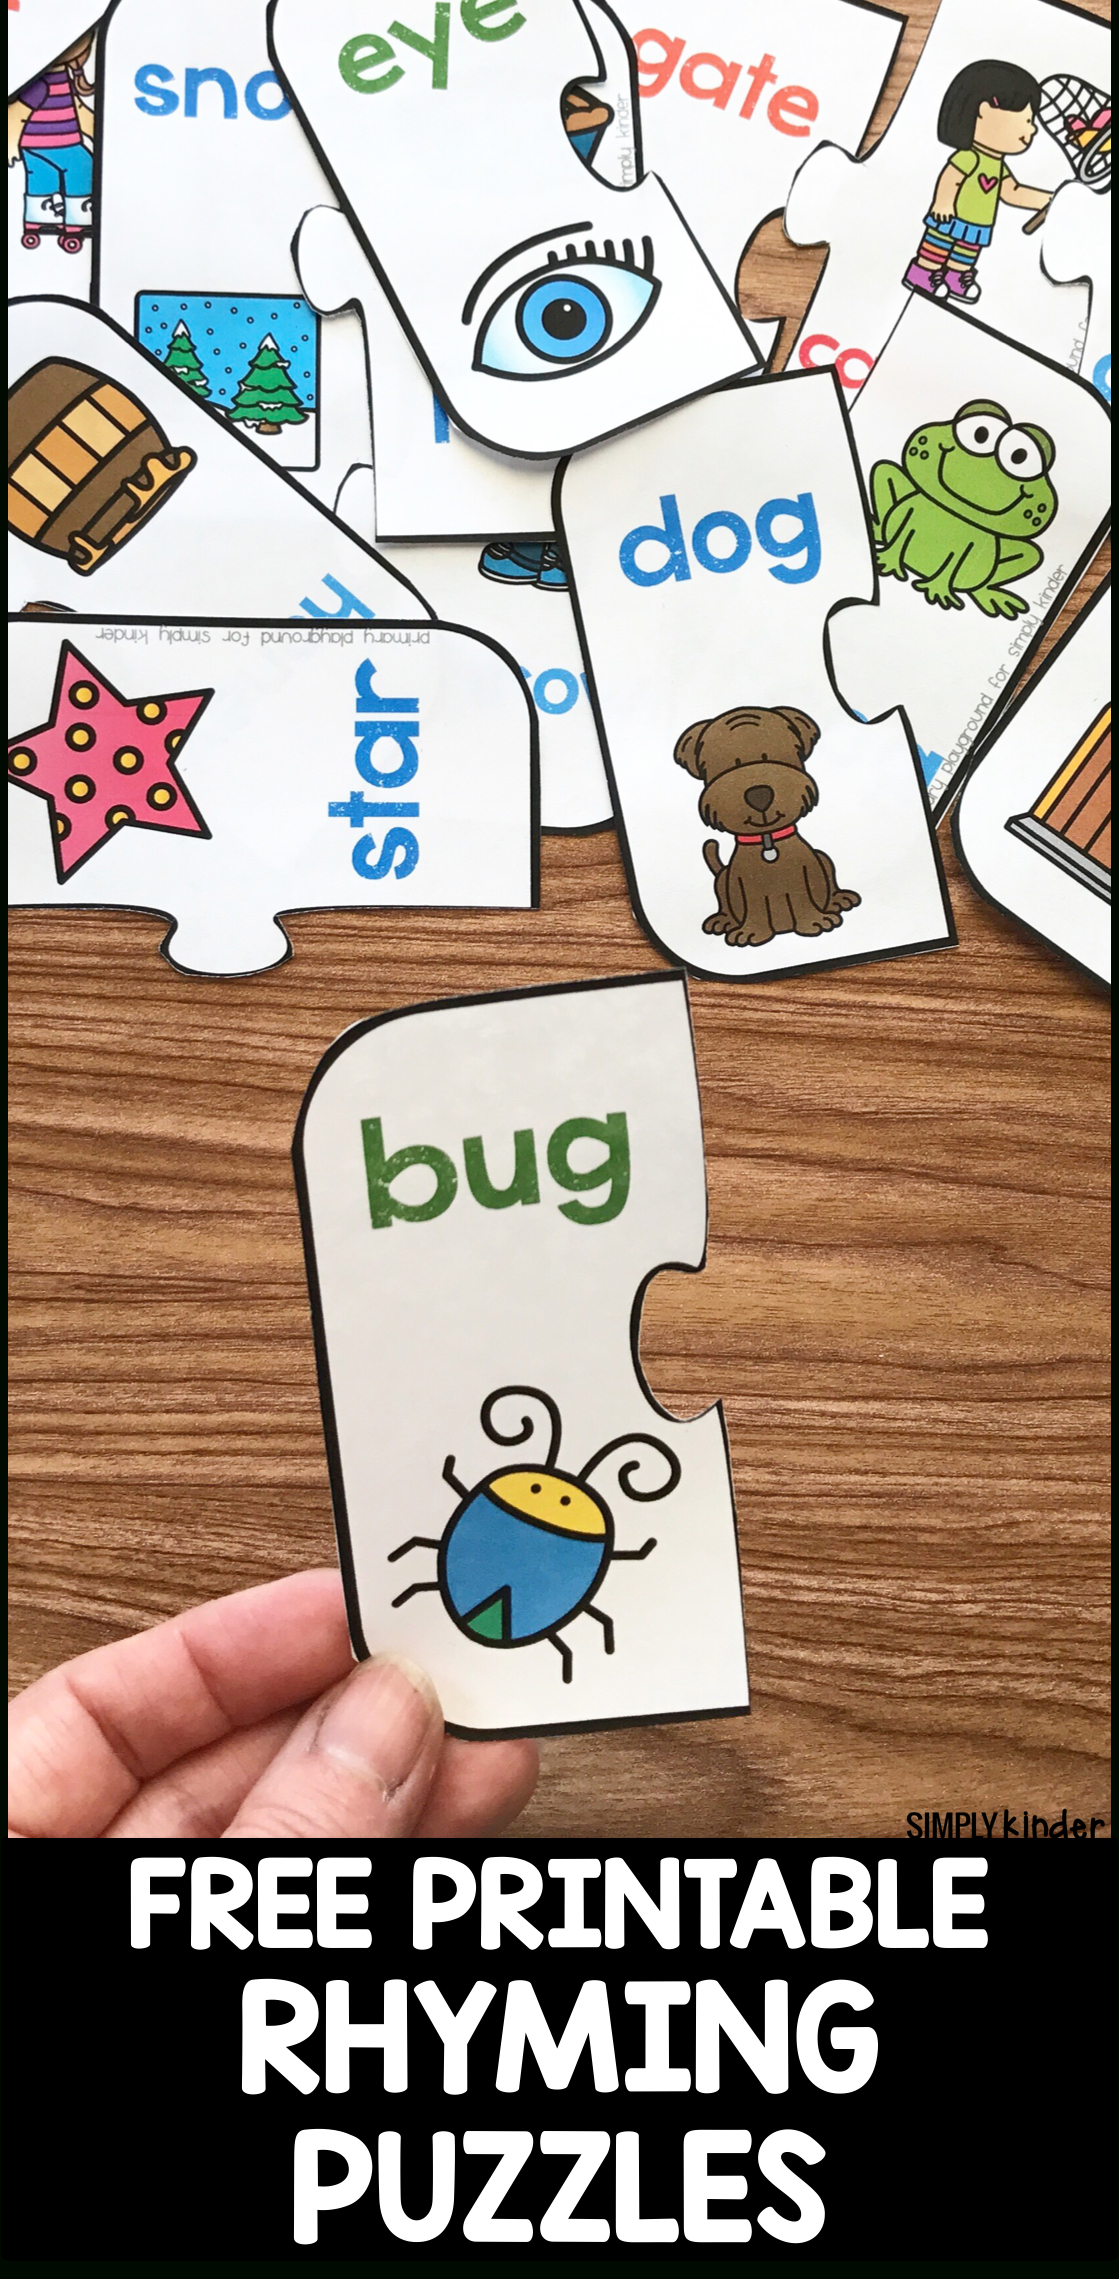 Free Printable Rhyming Puzzles - Simply Kinder - Printable Puzzles Preschool